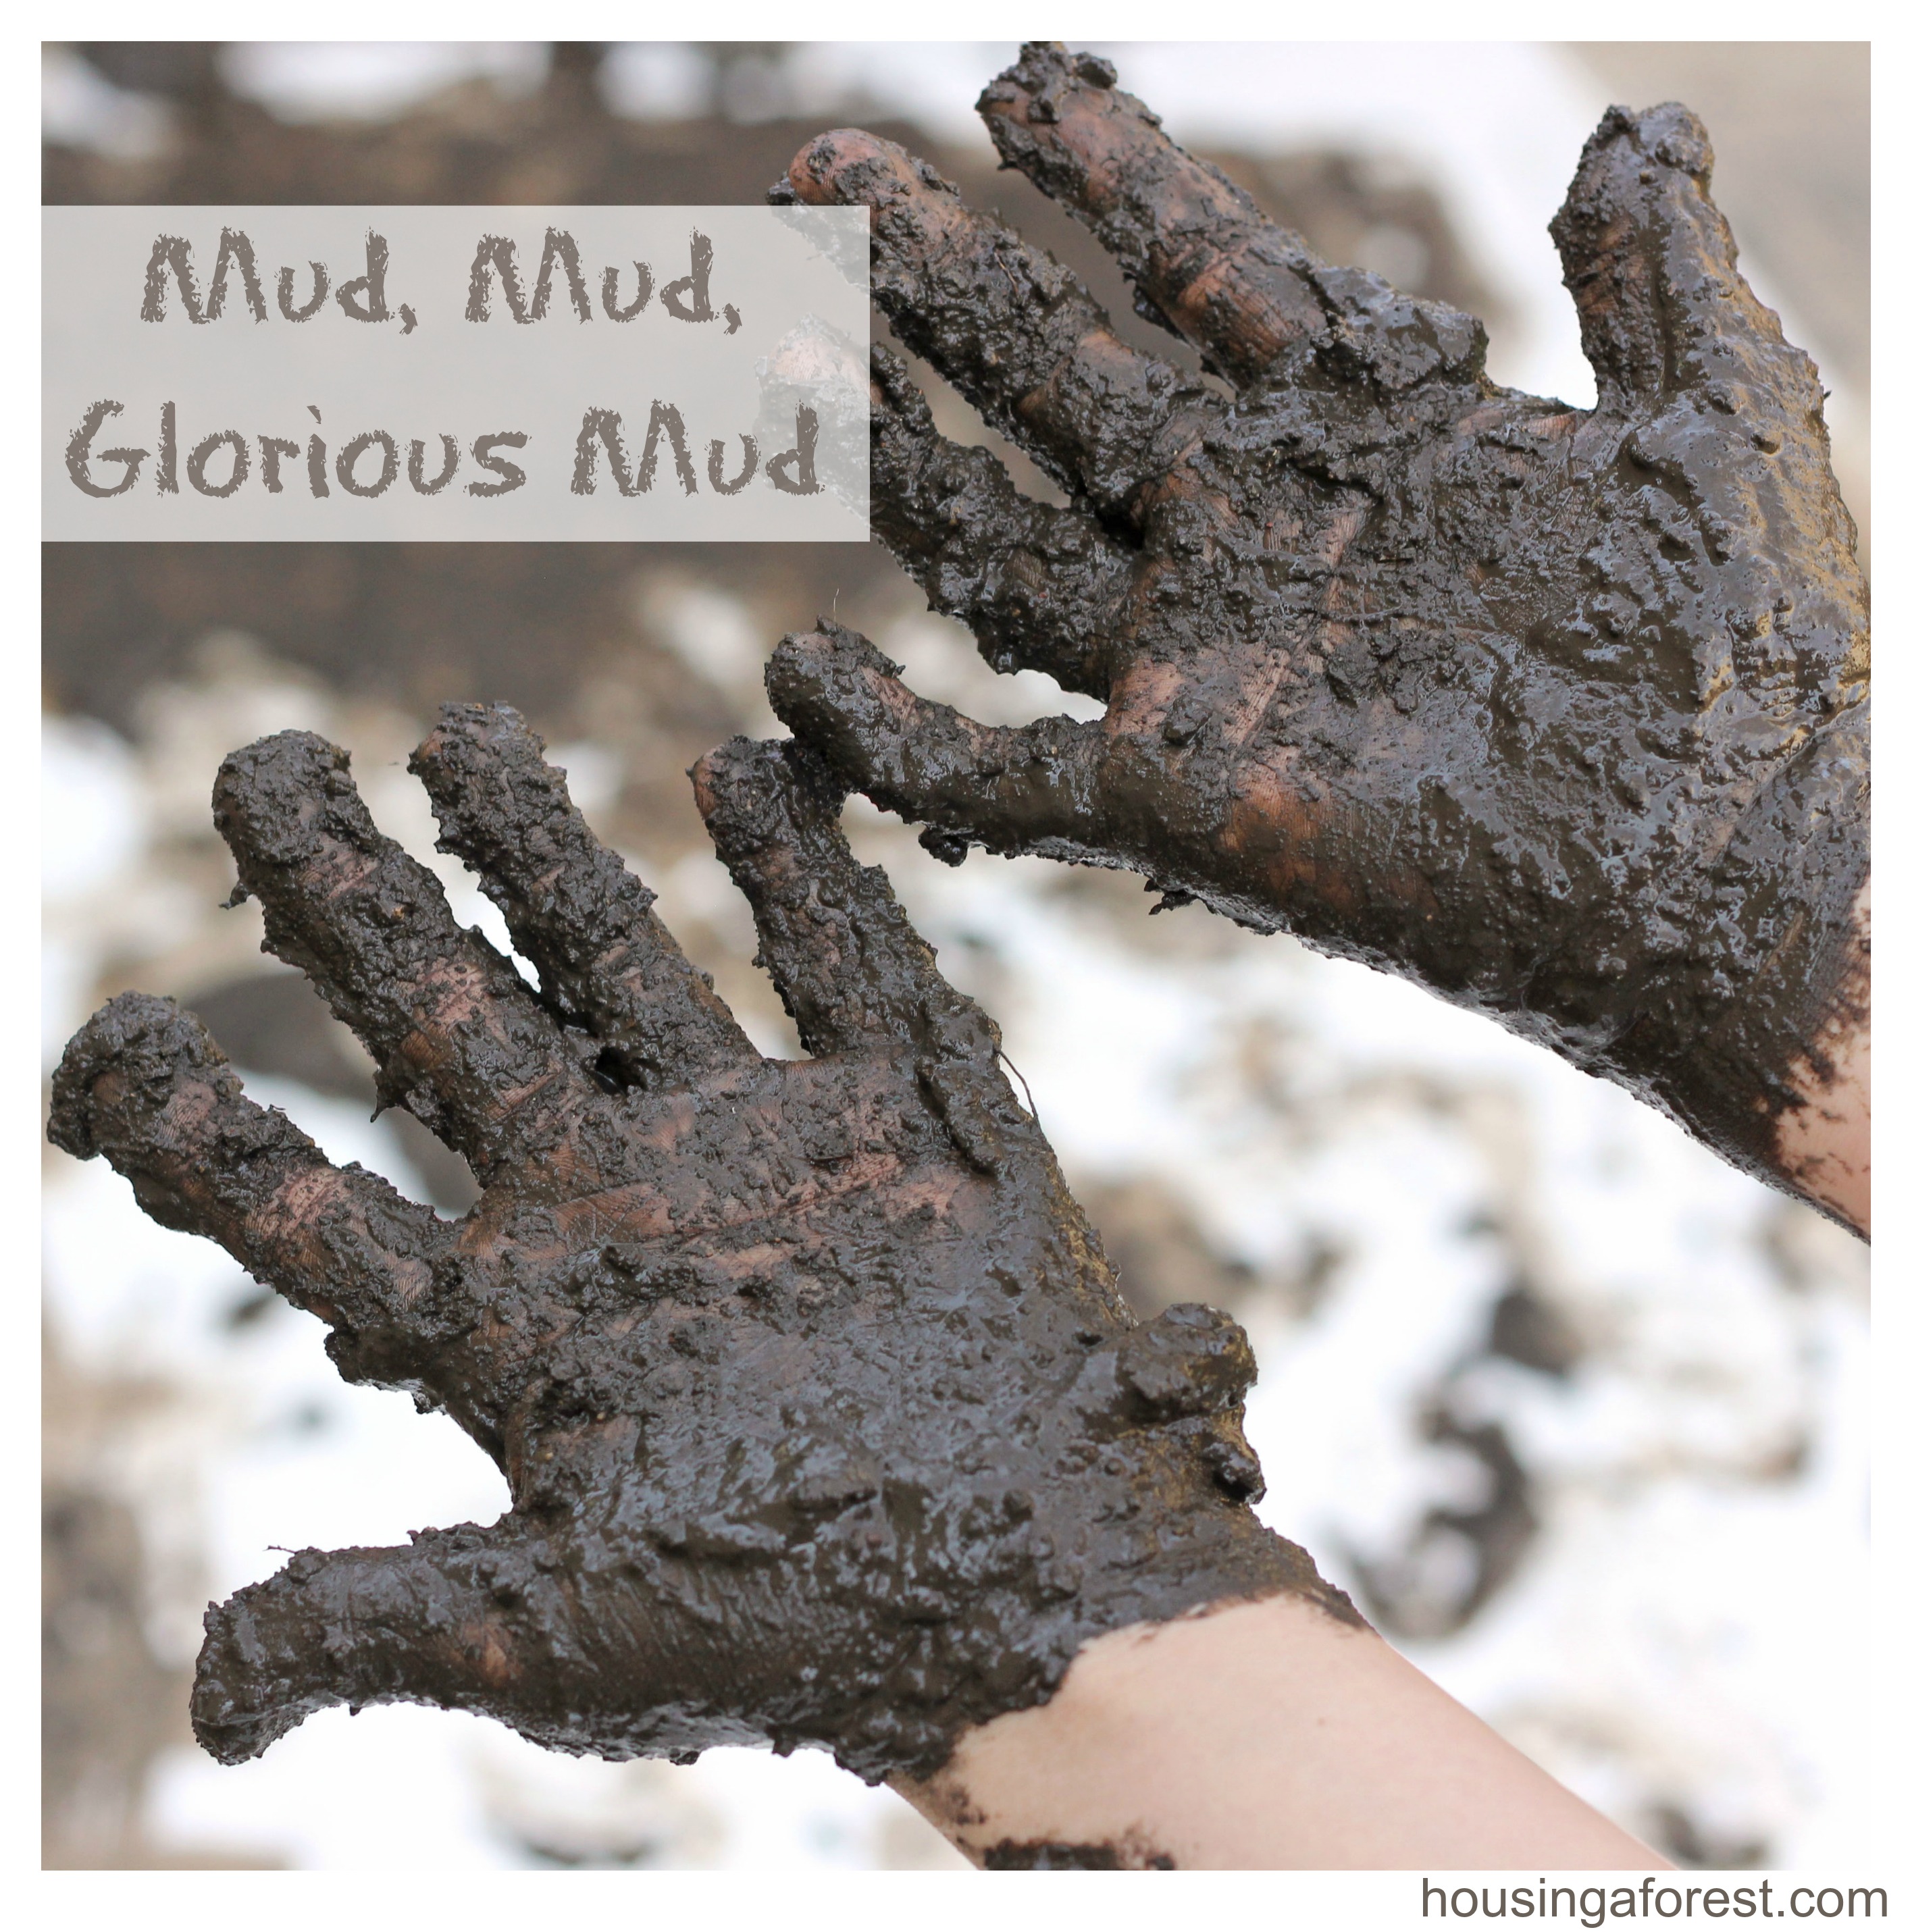 http://www.housingaforest.com/wp-content/uploads/2013/04/Mud-Mud-Glorious-Mud.jpg